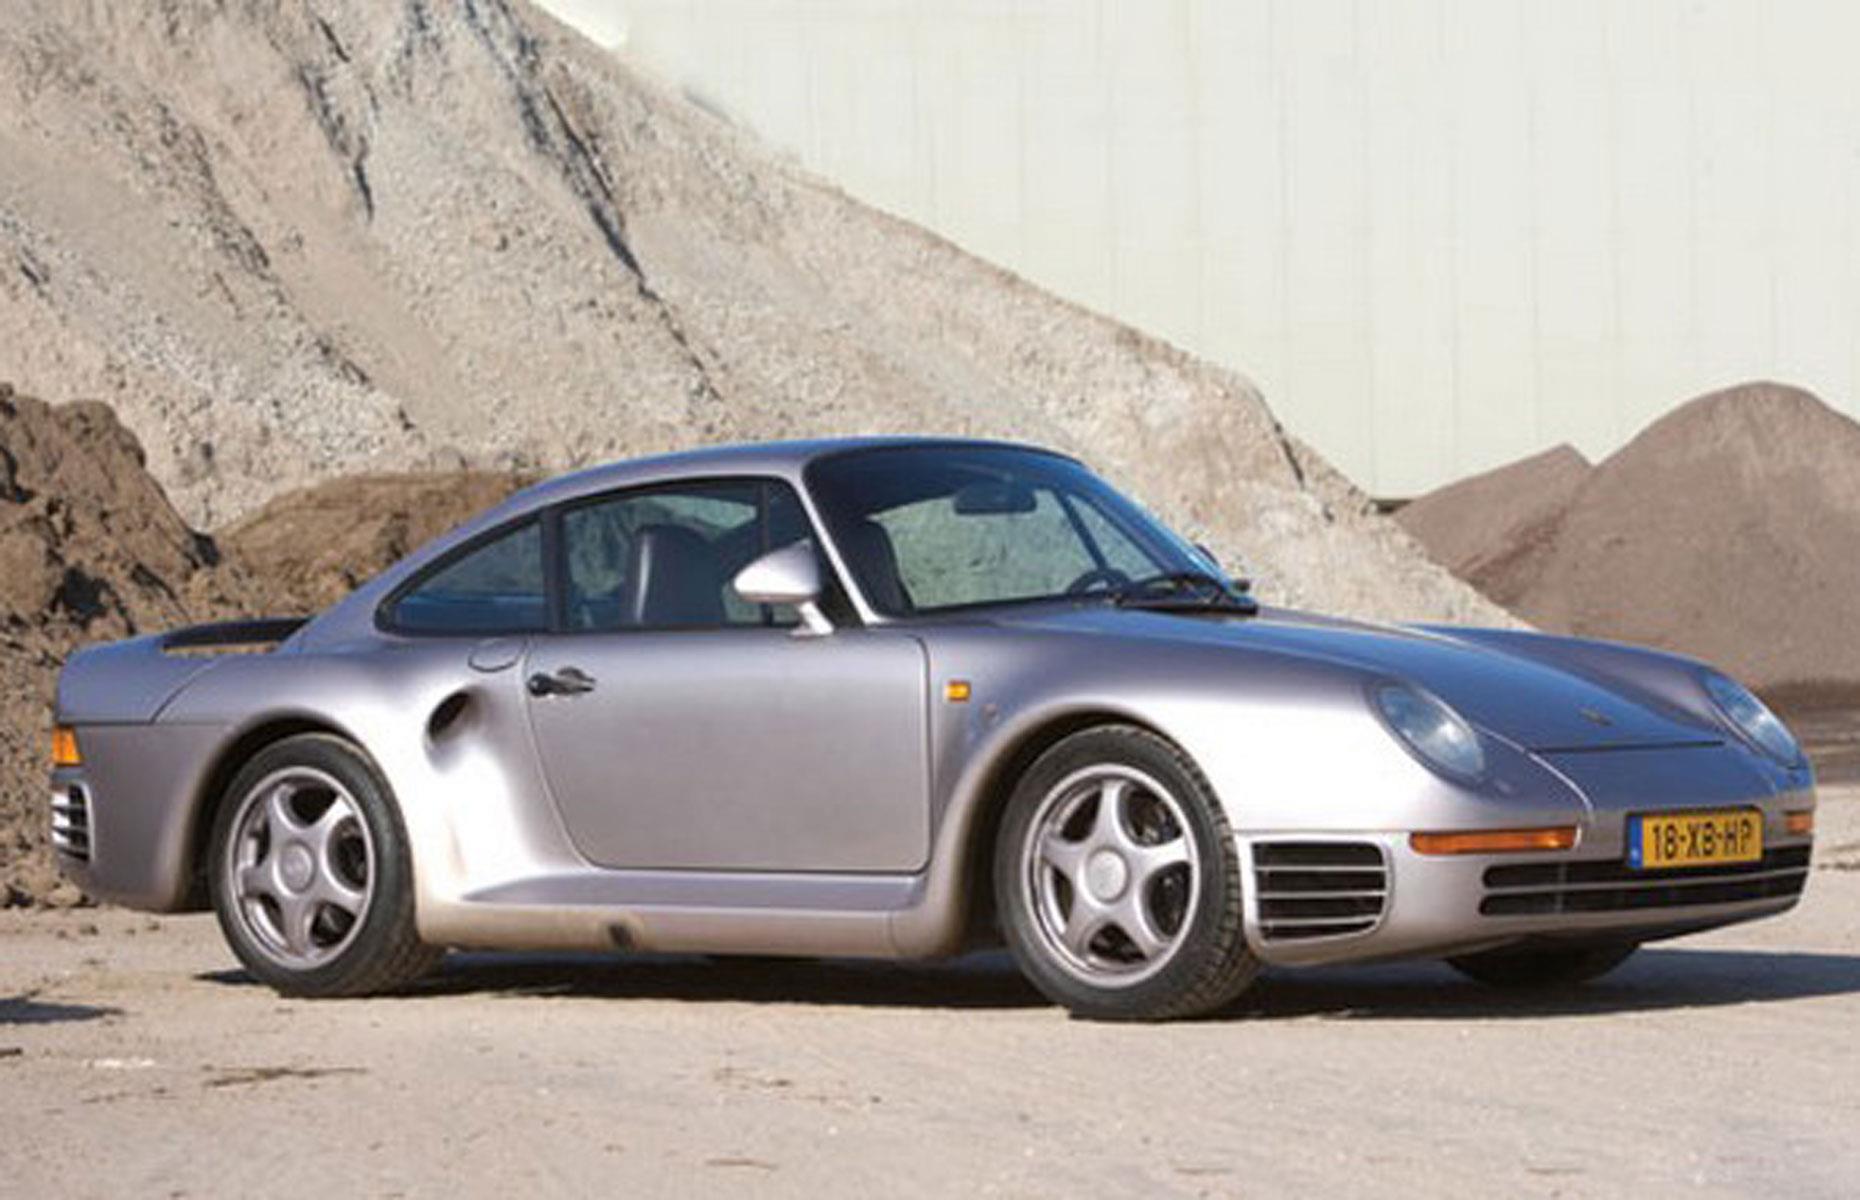 Automobiles: Bill Gates' Porsche 959